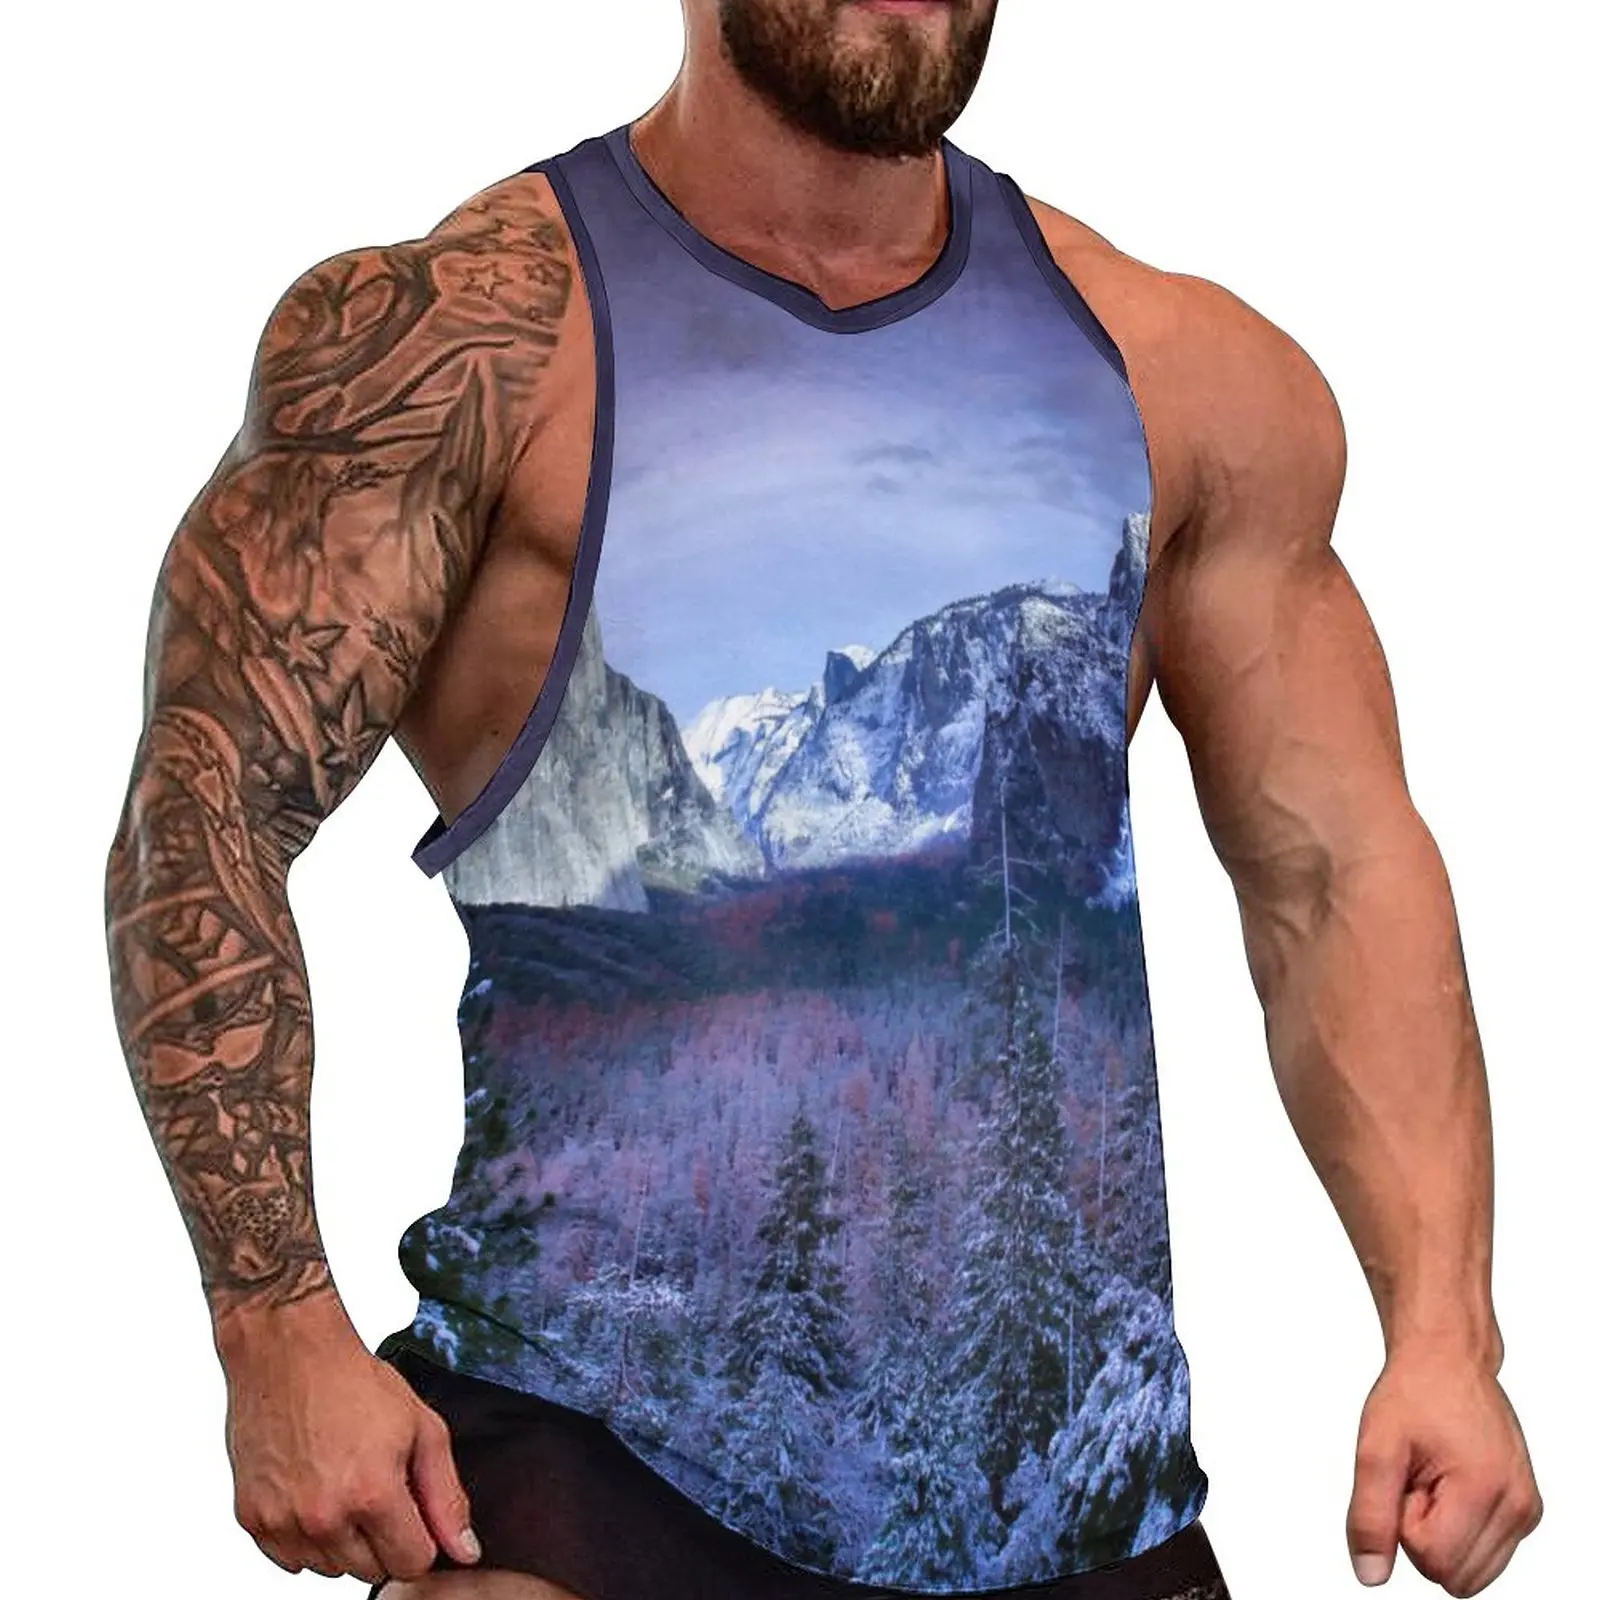 

Violet Mountain Tank Top Clouds Print Sportswear Tops Beach Workout Man's Design Sleeveless Vests Plus Size 4XL 5XL